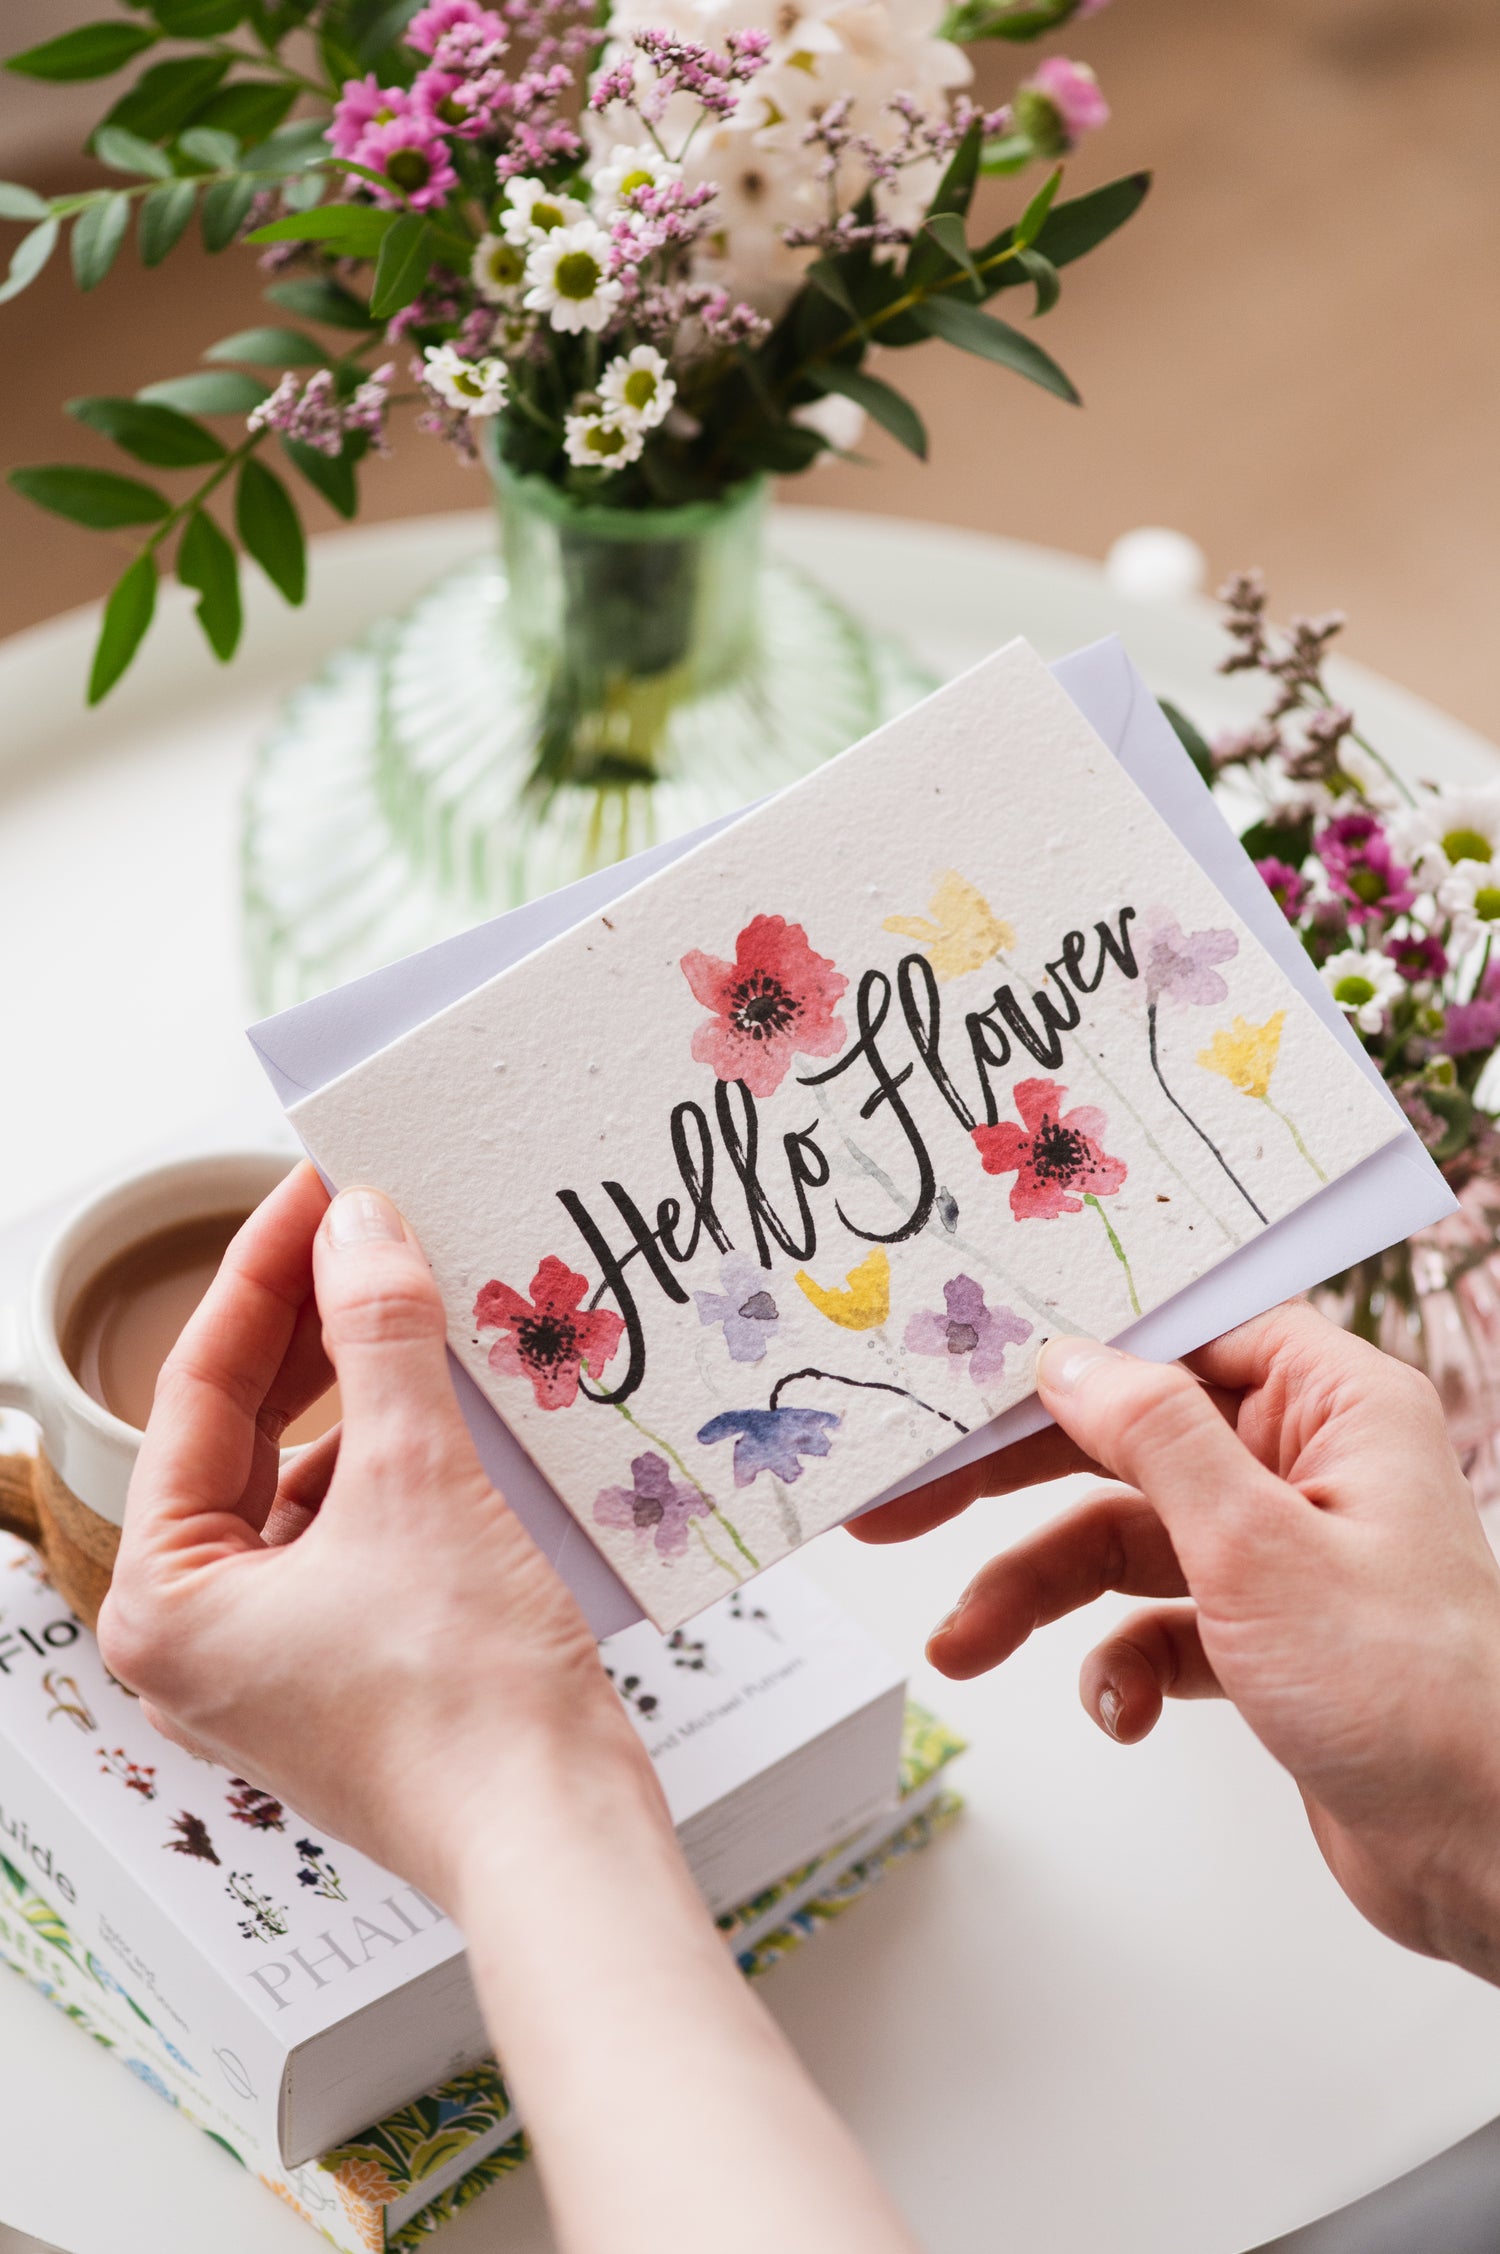 Hello Flower Plantable Card